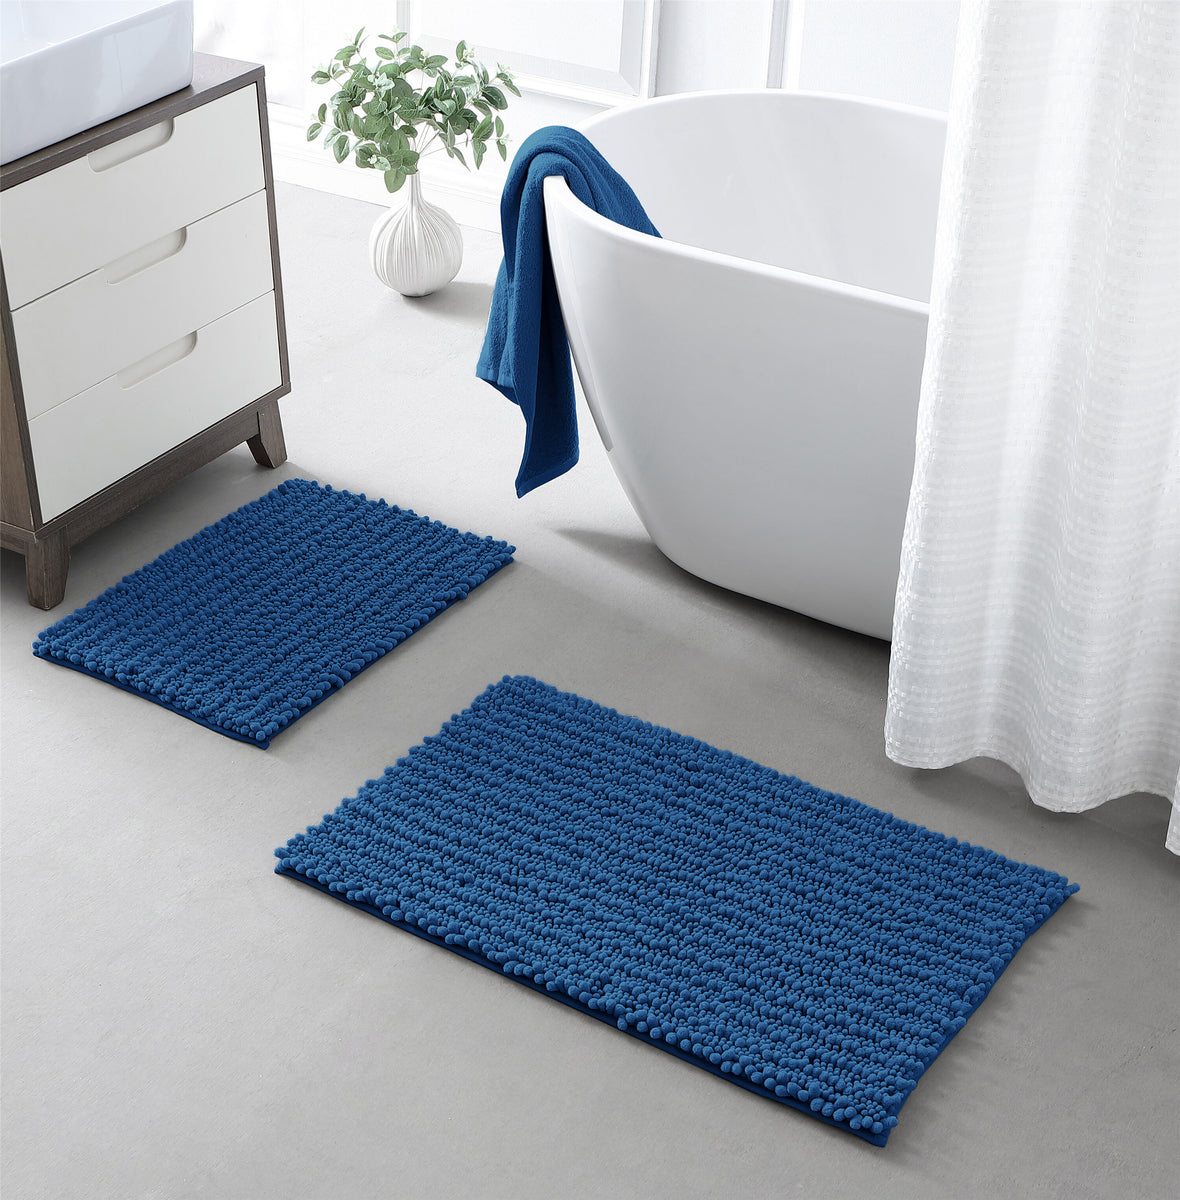 LuxUrux Lavender Bathroom Rug Set–Extra-Soft Plush Bath mat Shower Bathroom  Rugs,1'' Chenille Microfiber Material, Super Absorbent (Rectangular Set